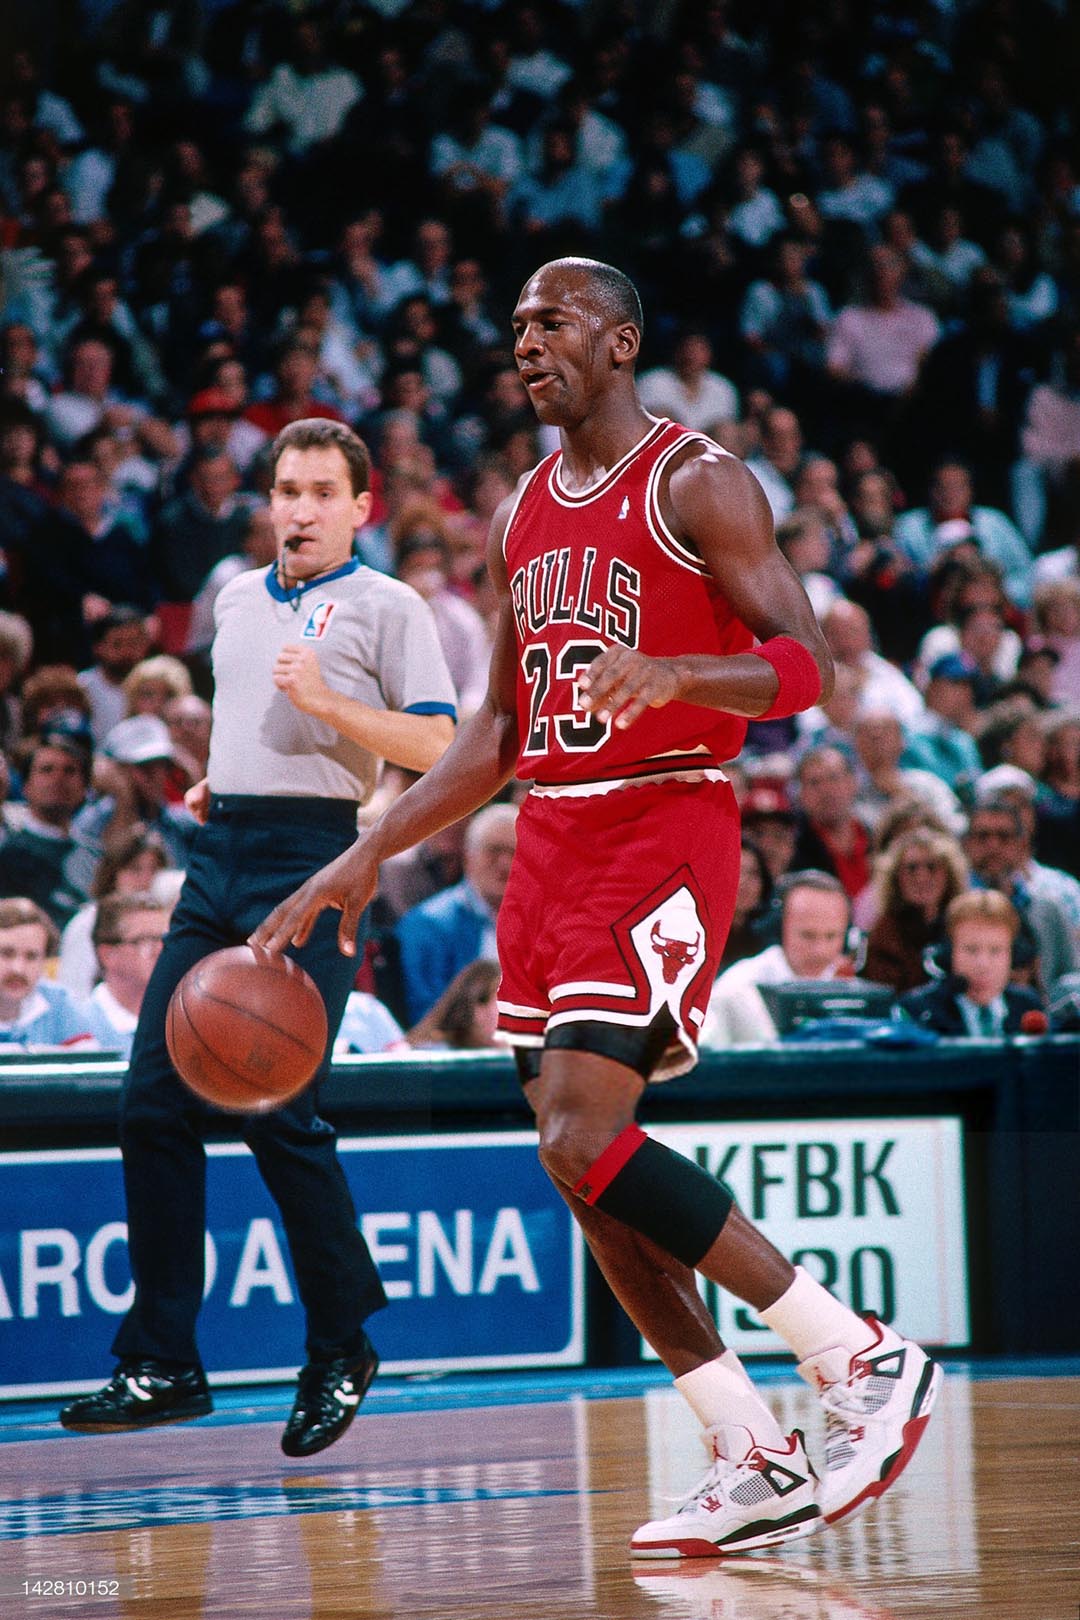 Michael Jordan wearing the Air Jordan 4 Fire Red